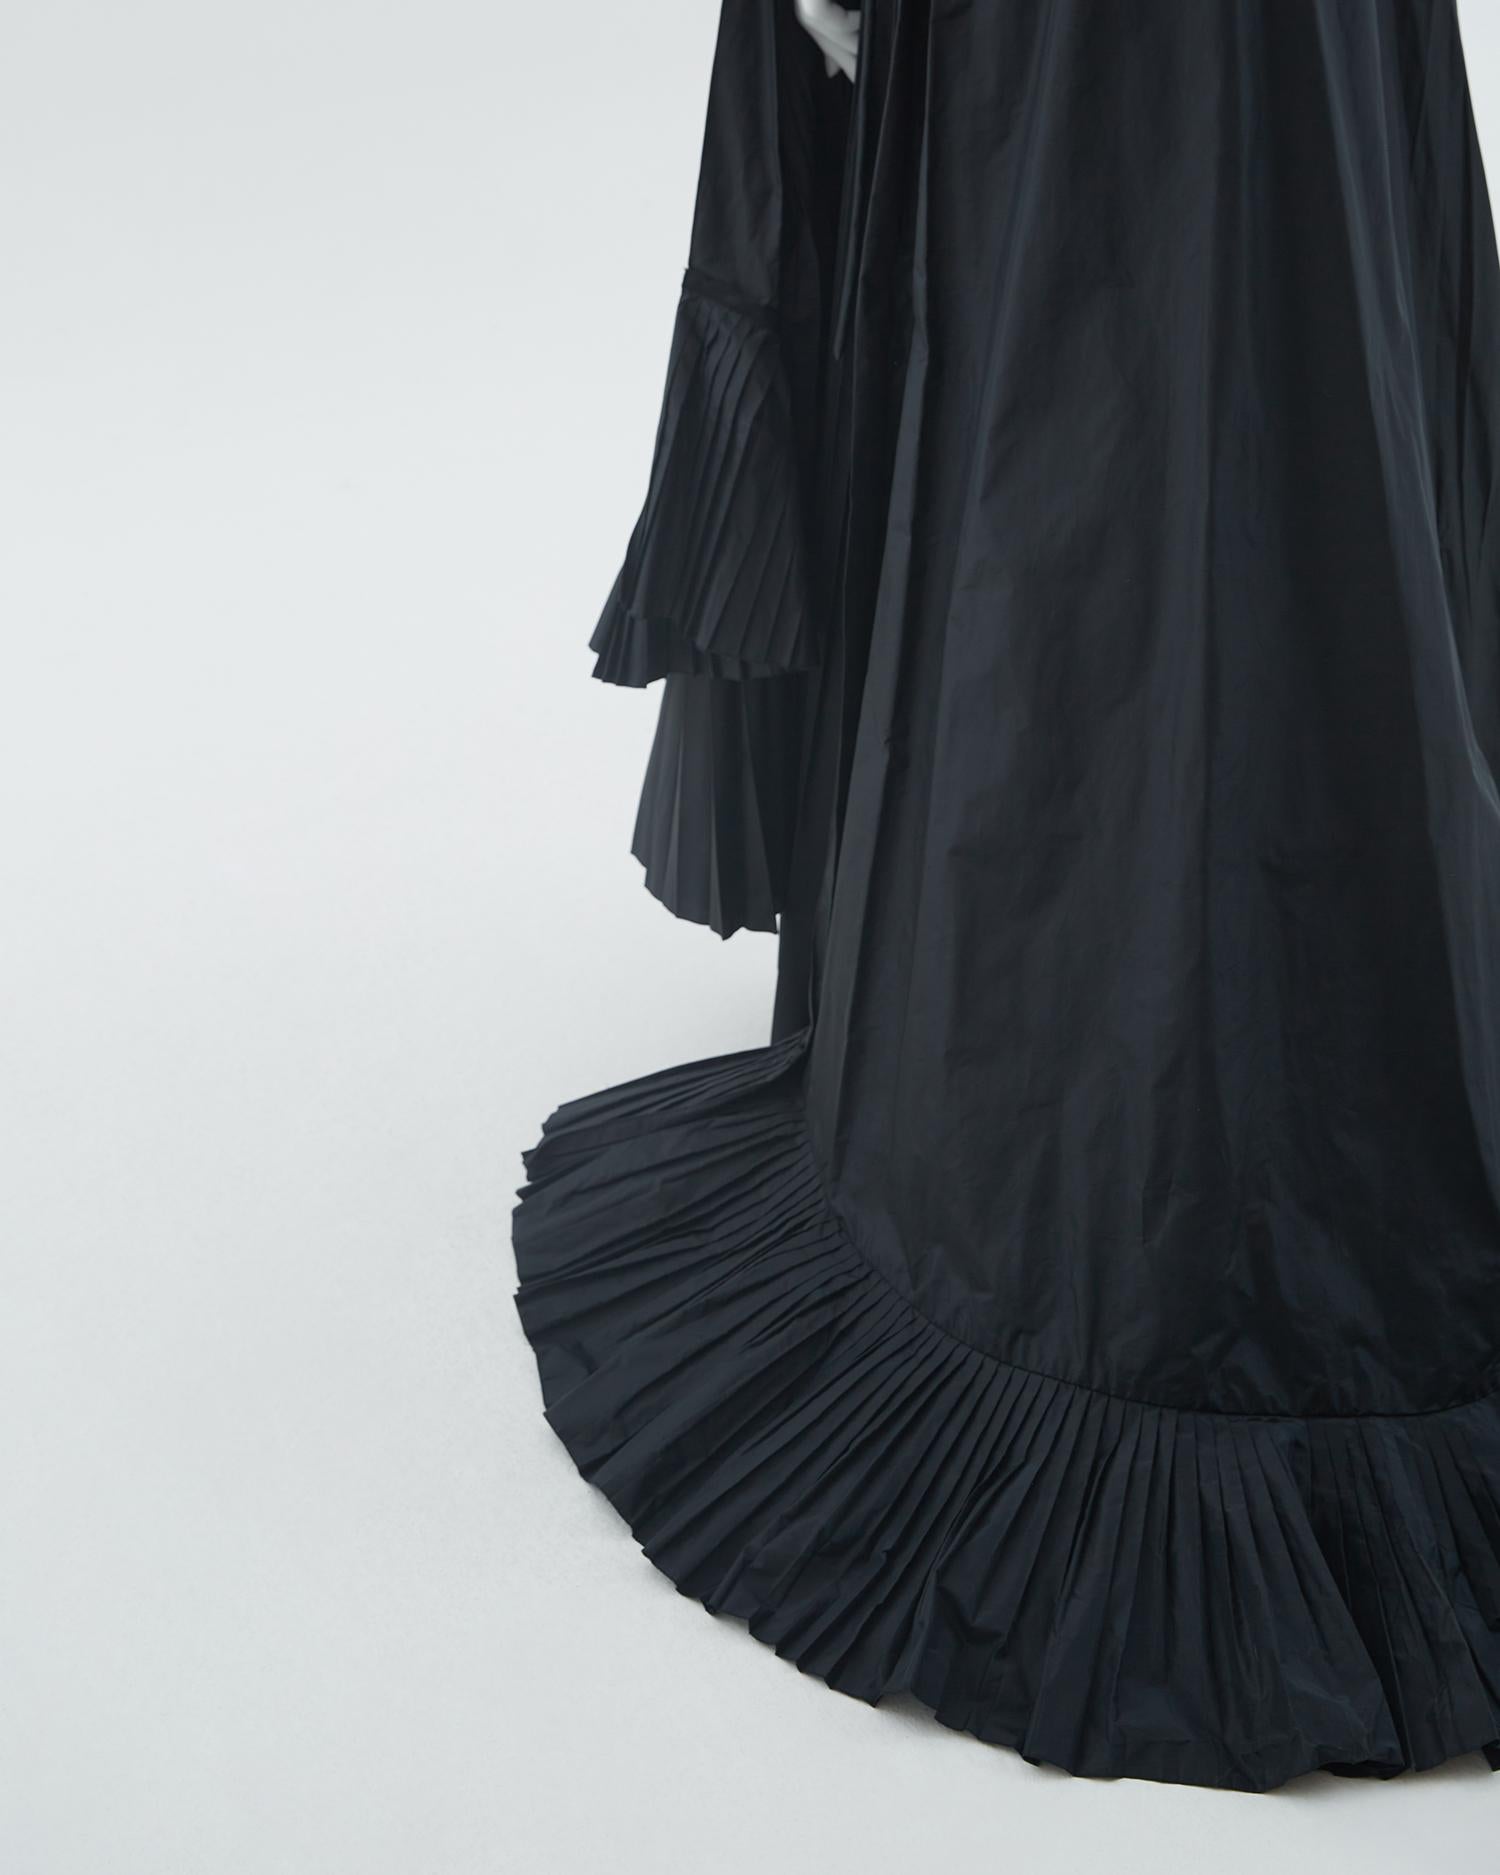 Gianfranco Ferrè F/W 2000 black plated  taffeta skirt and white silk blouse set For Sale 10